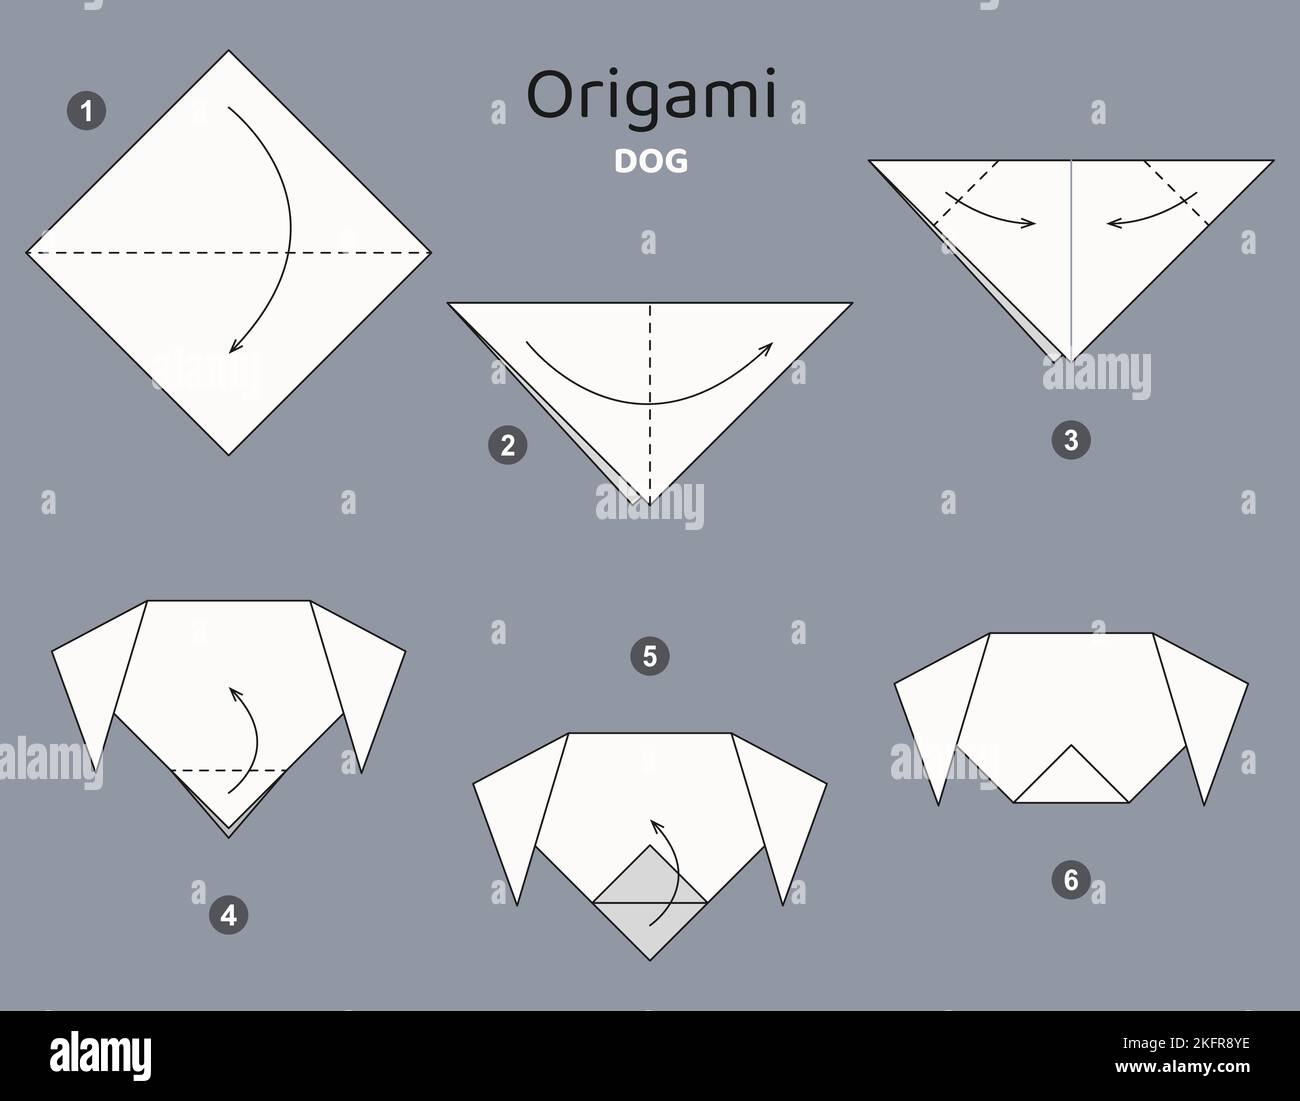 Origami tutorial. Origami scheme for kids. Dog. Stock Vector